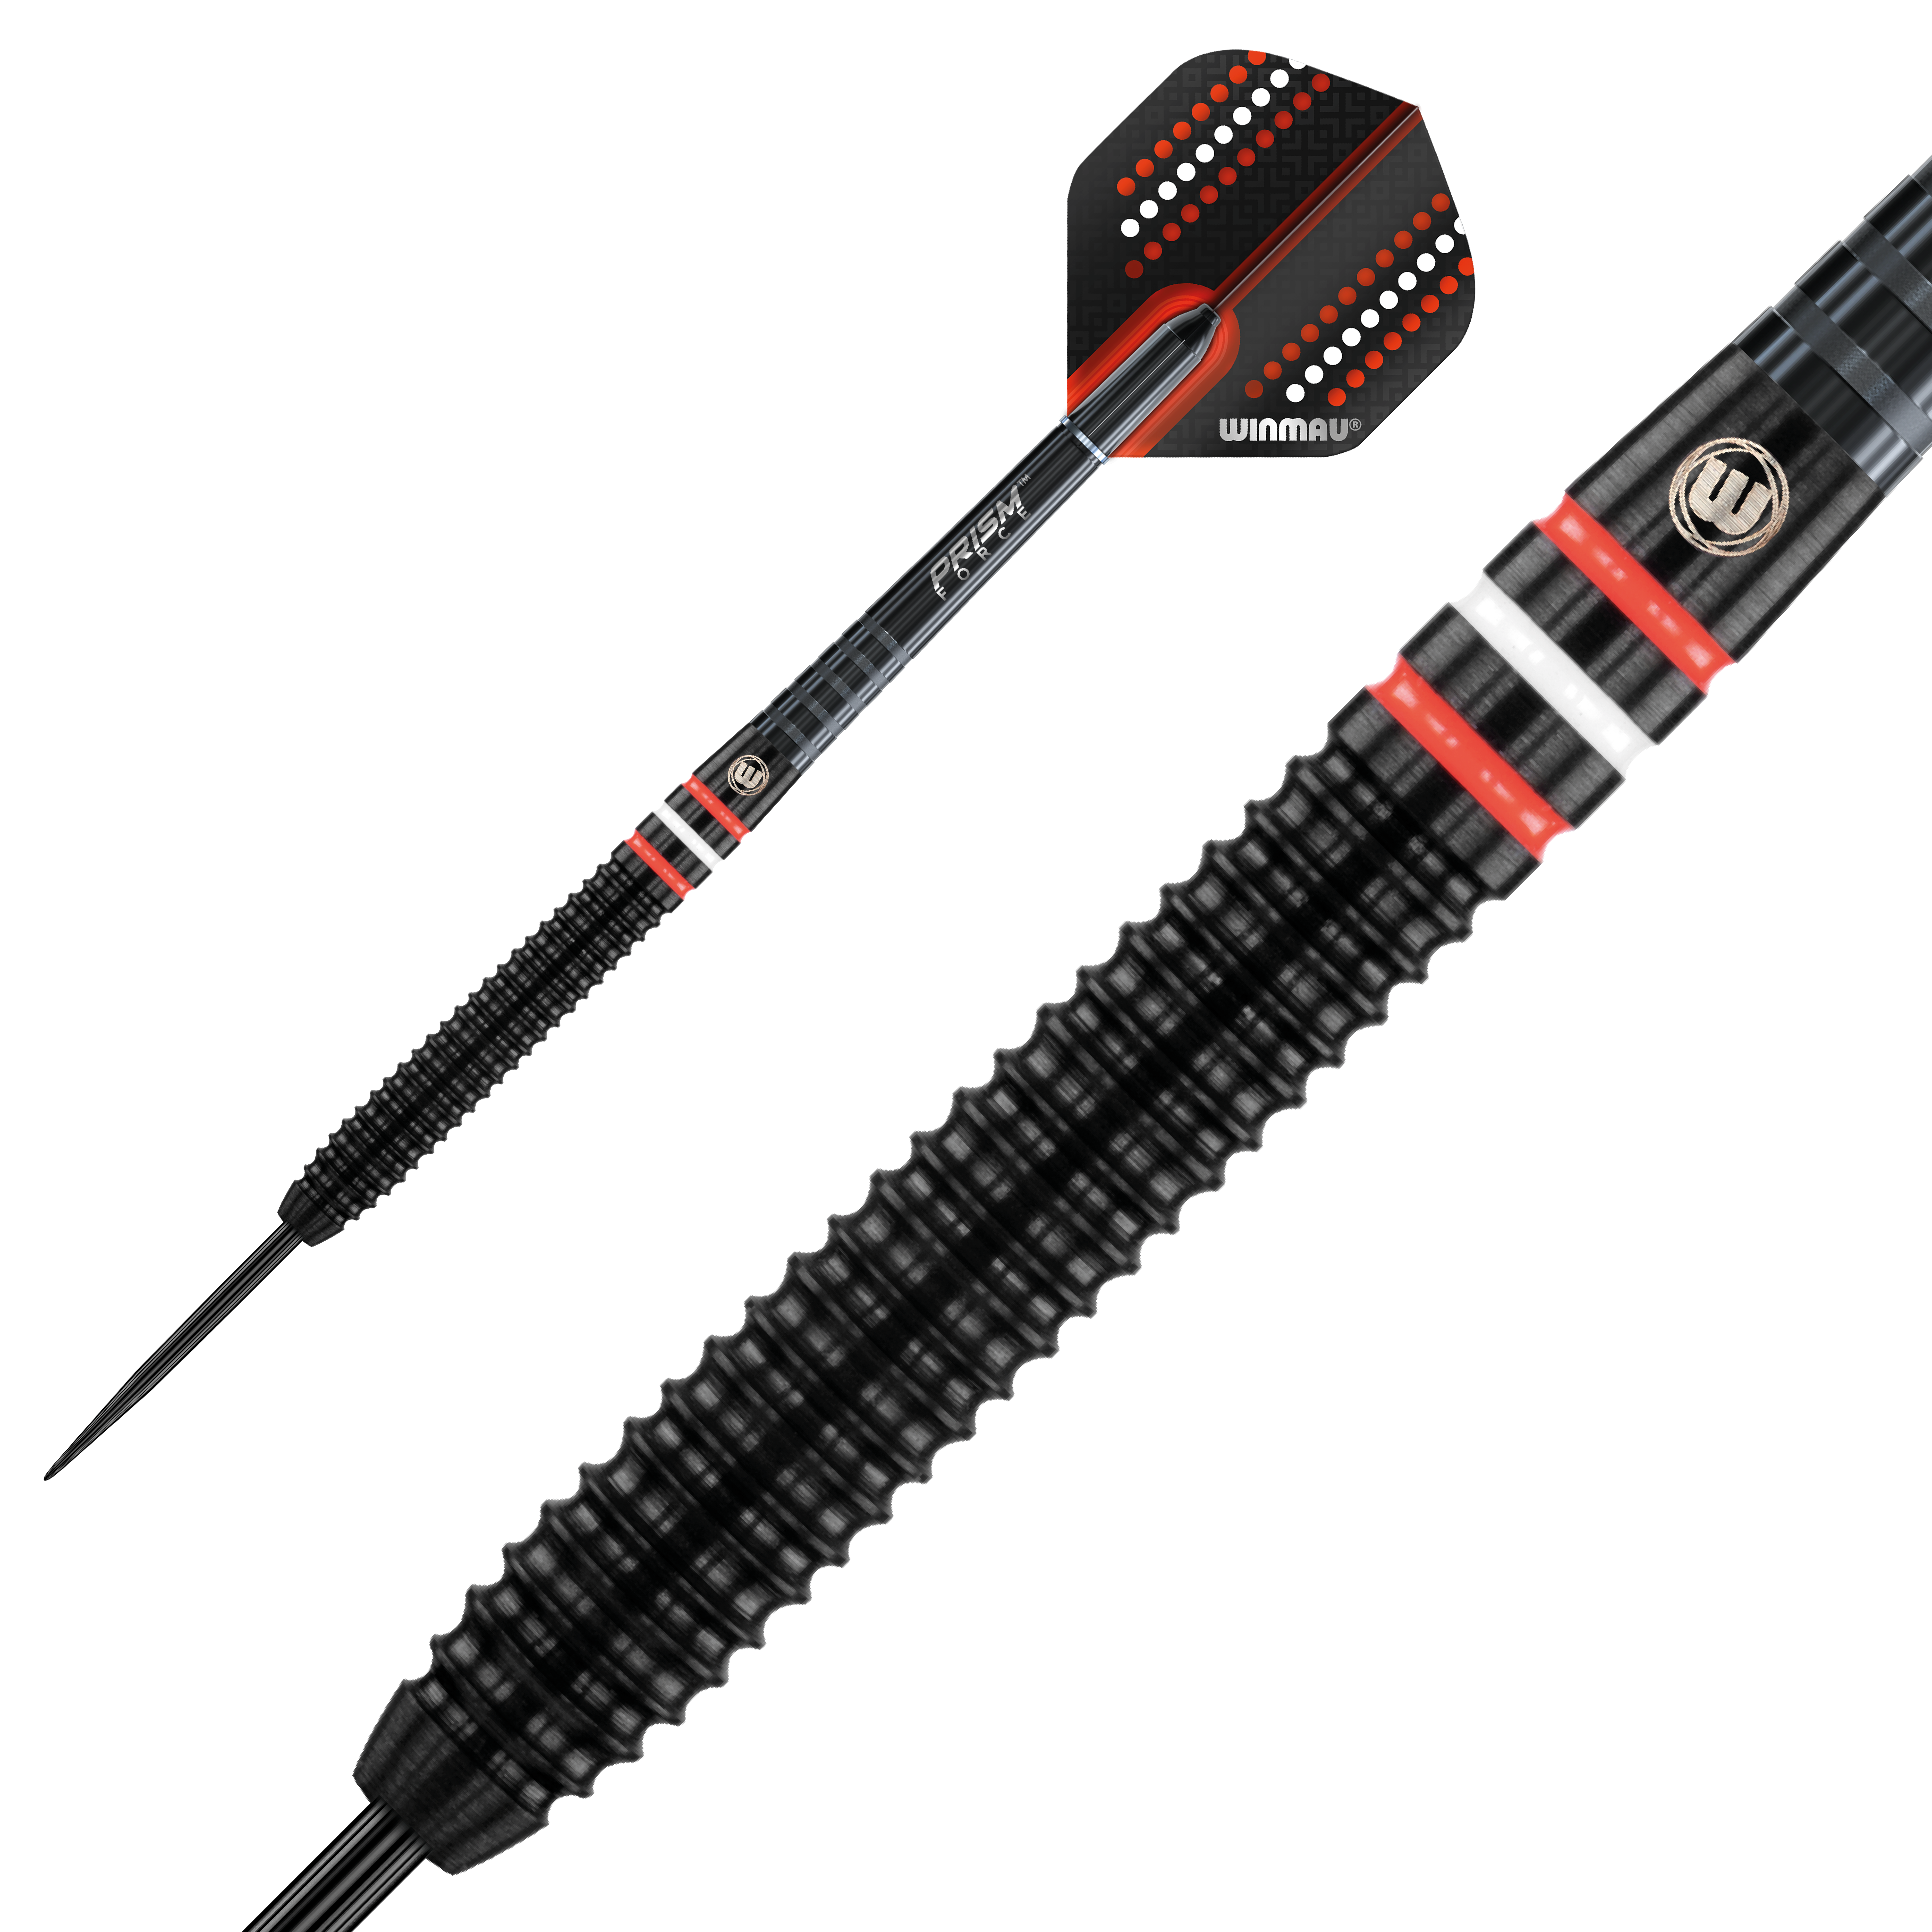 Winmau Pro-Line steeltip darts 24 gram